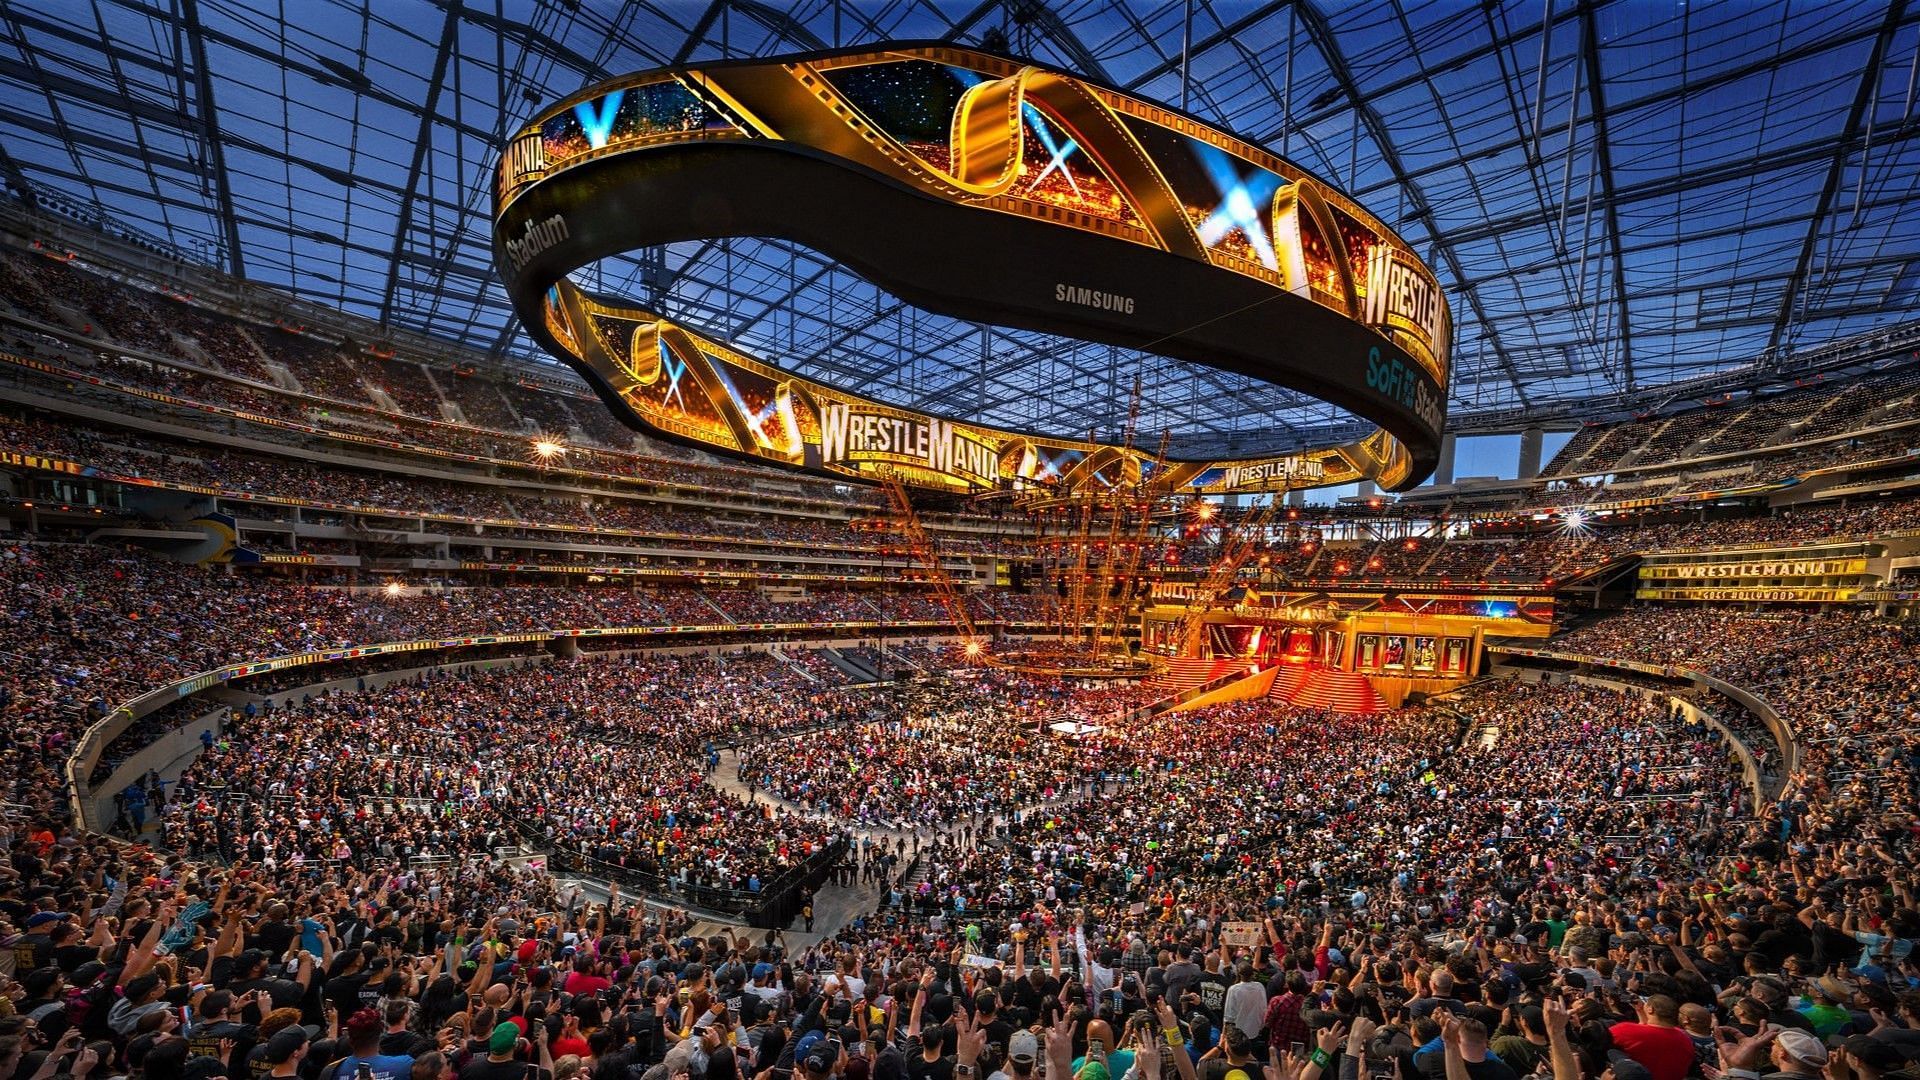 The WWE Universe packs SoFi Stadium for WrestleMania 39